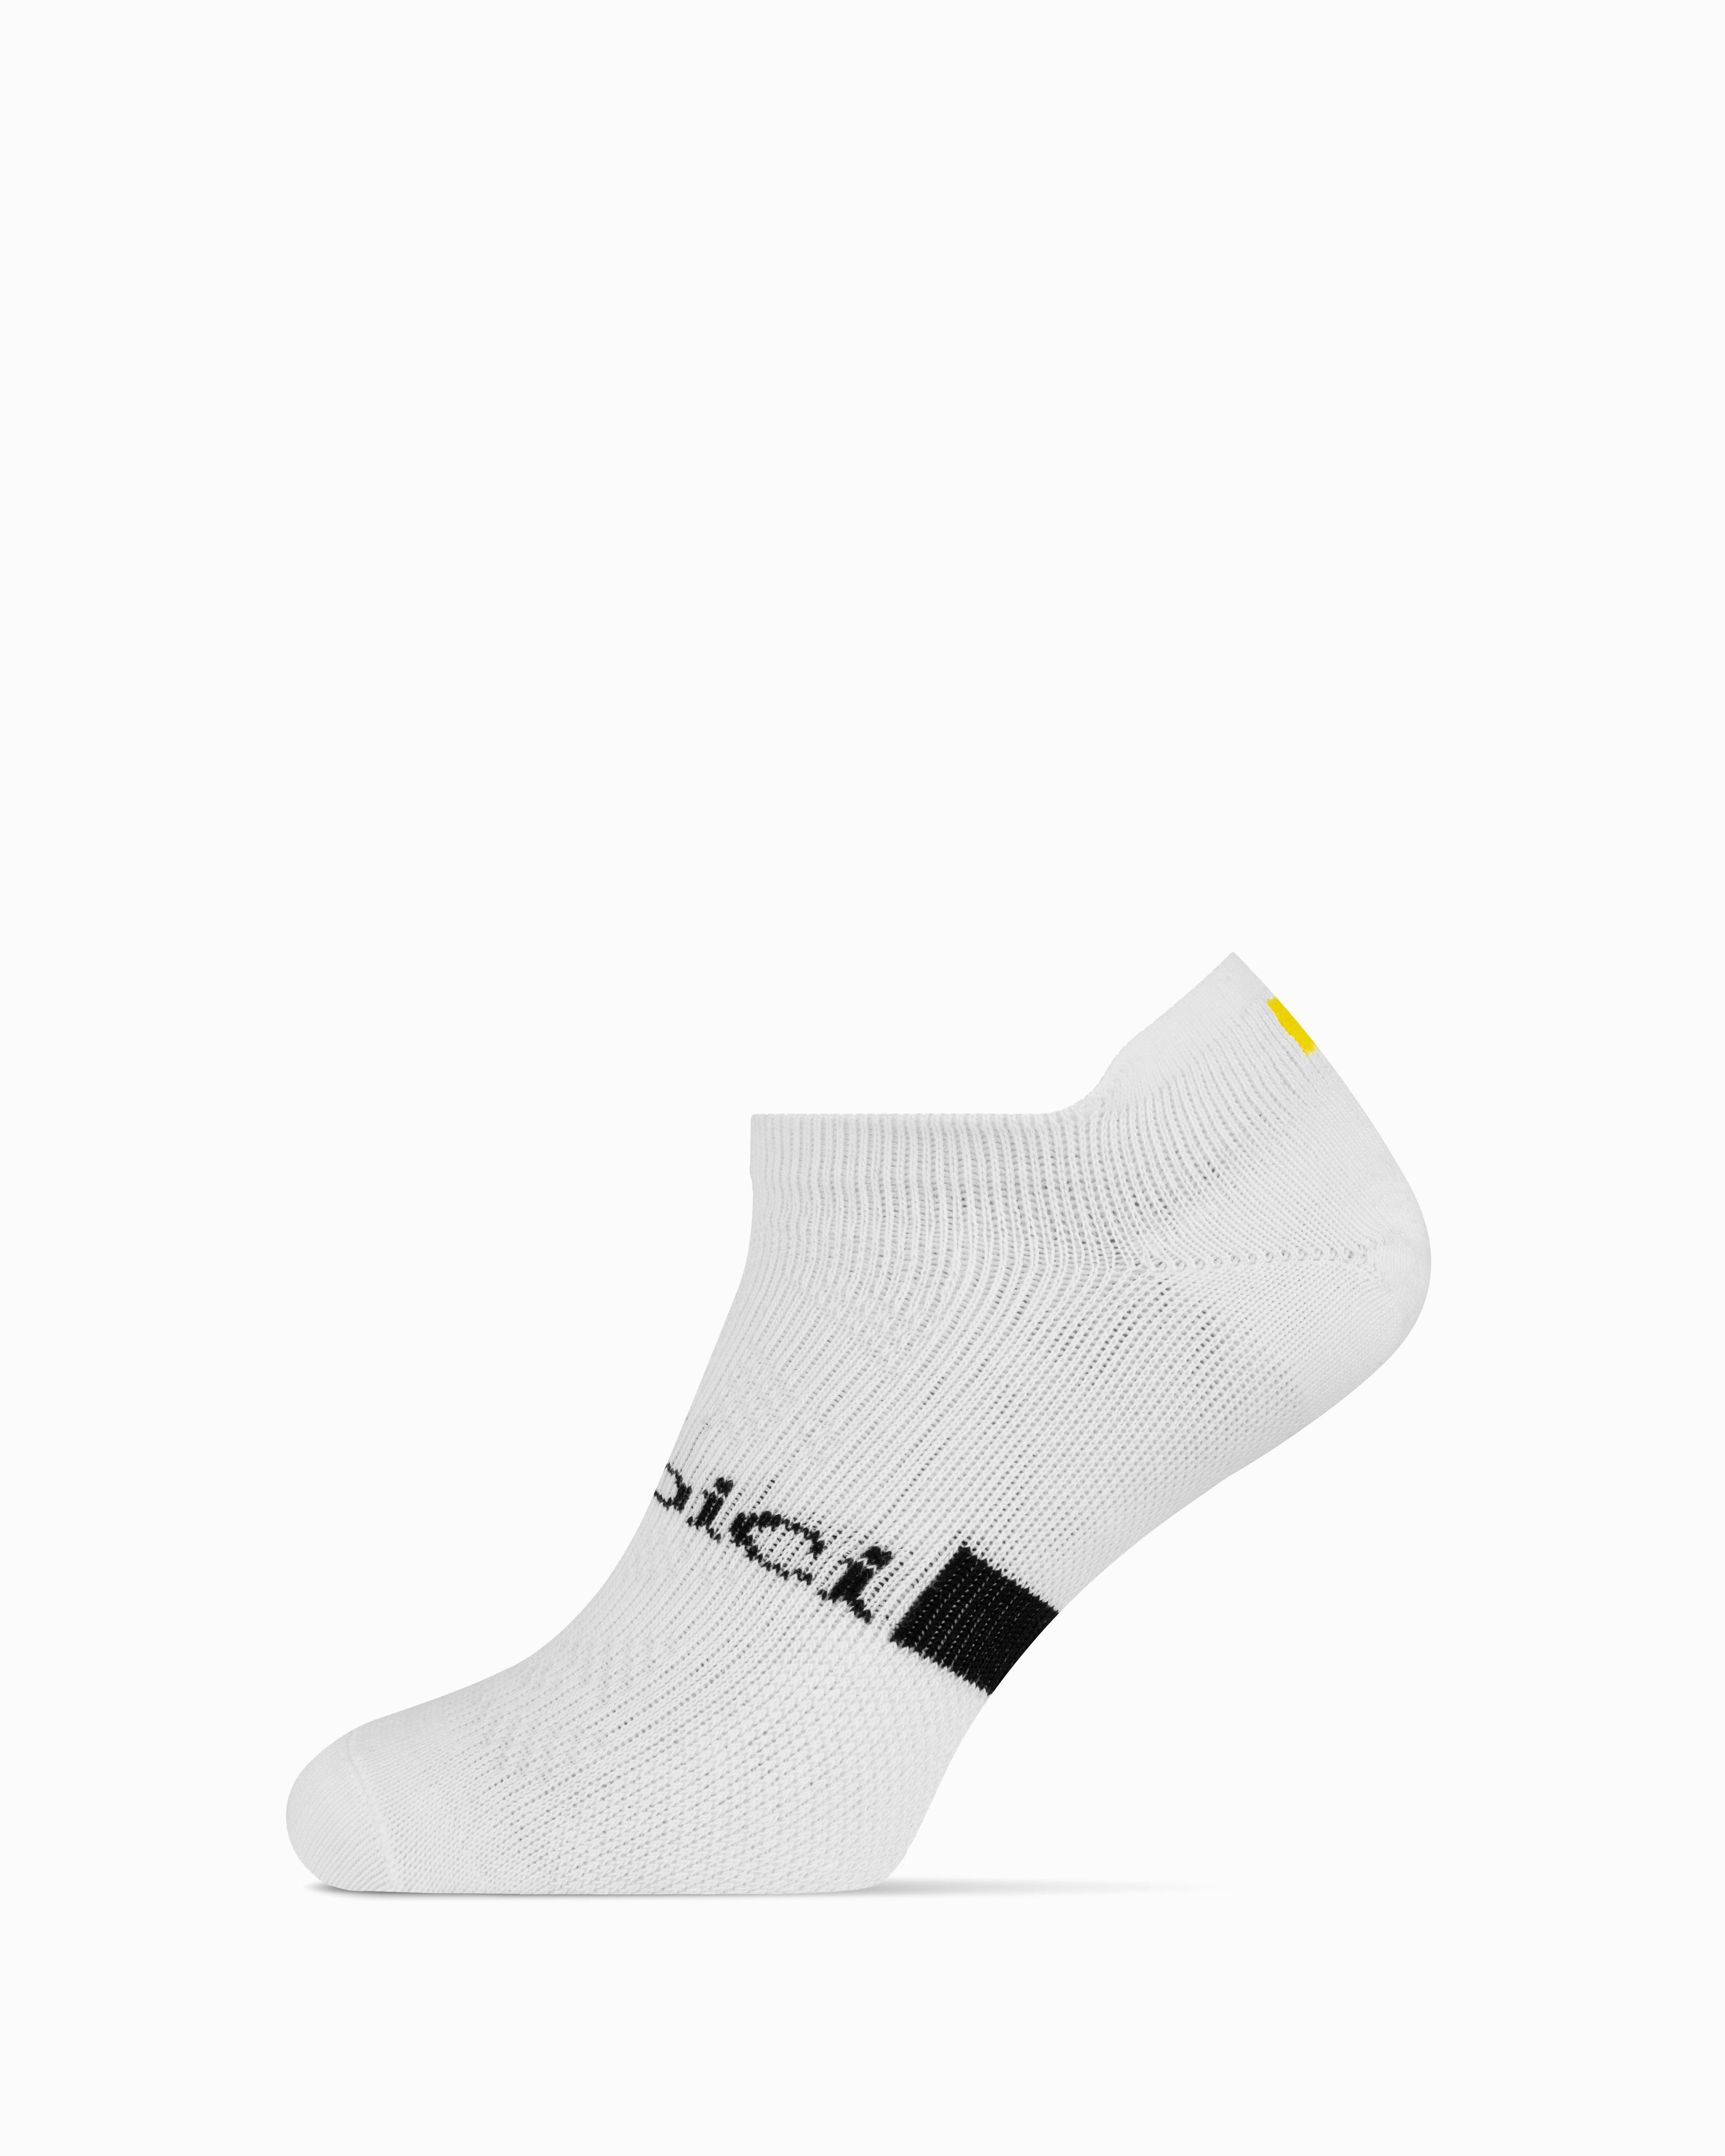 Velobici Anklet Socks (White)